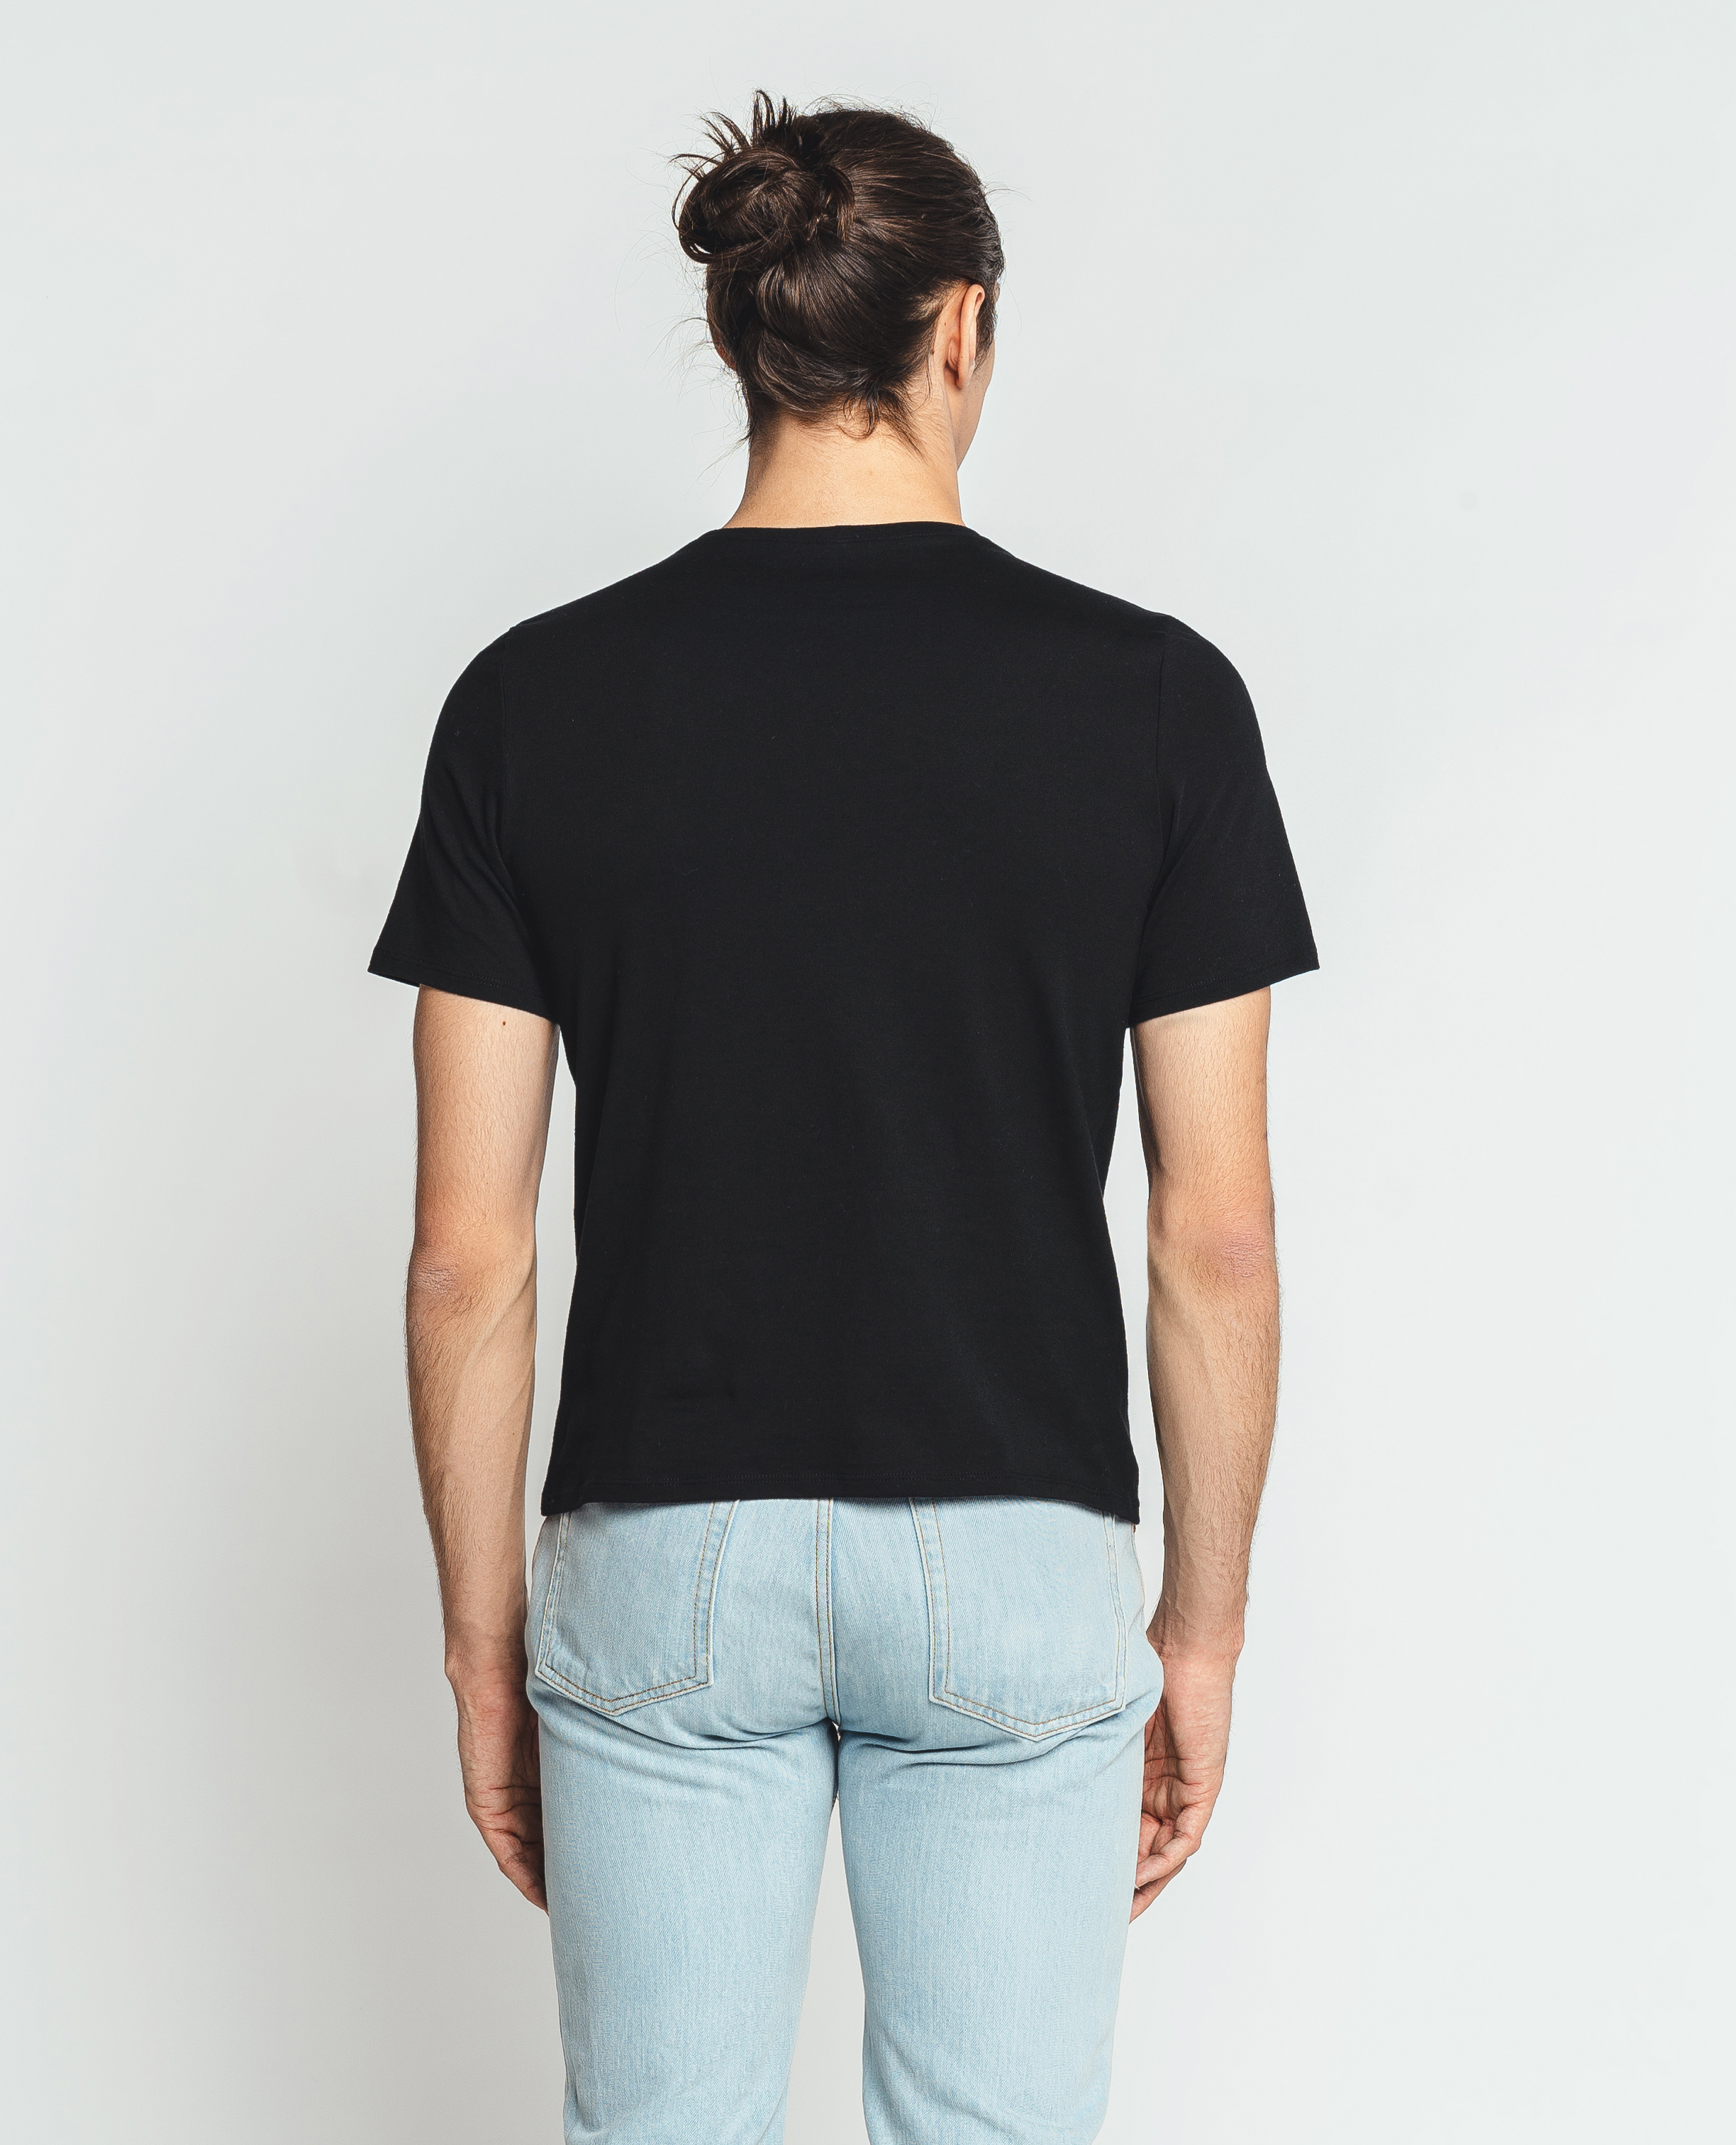 Black Basic Range -  Round Neck T-shirt  - NR0